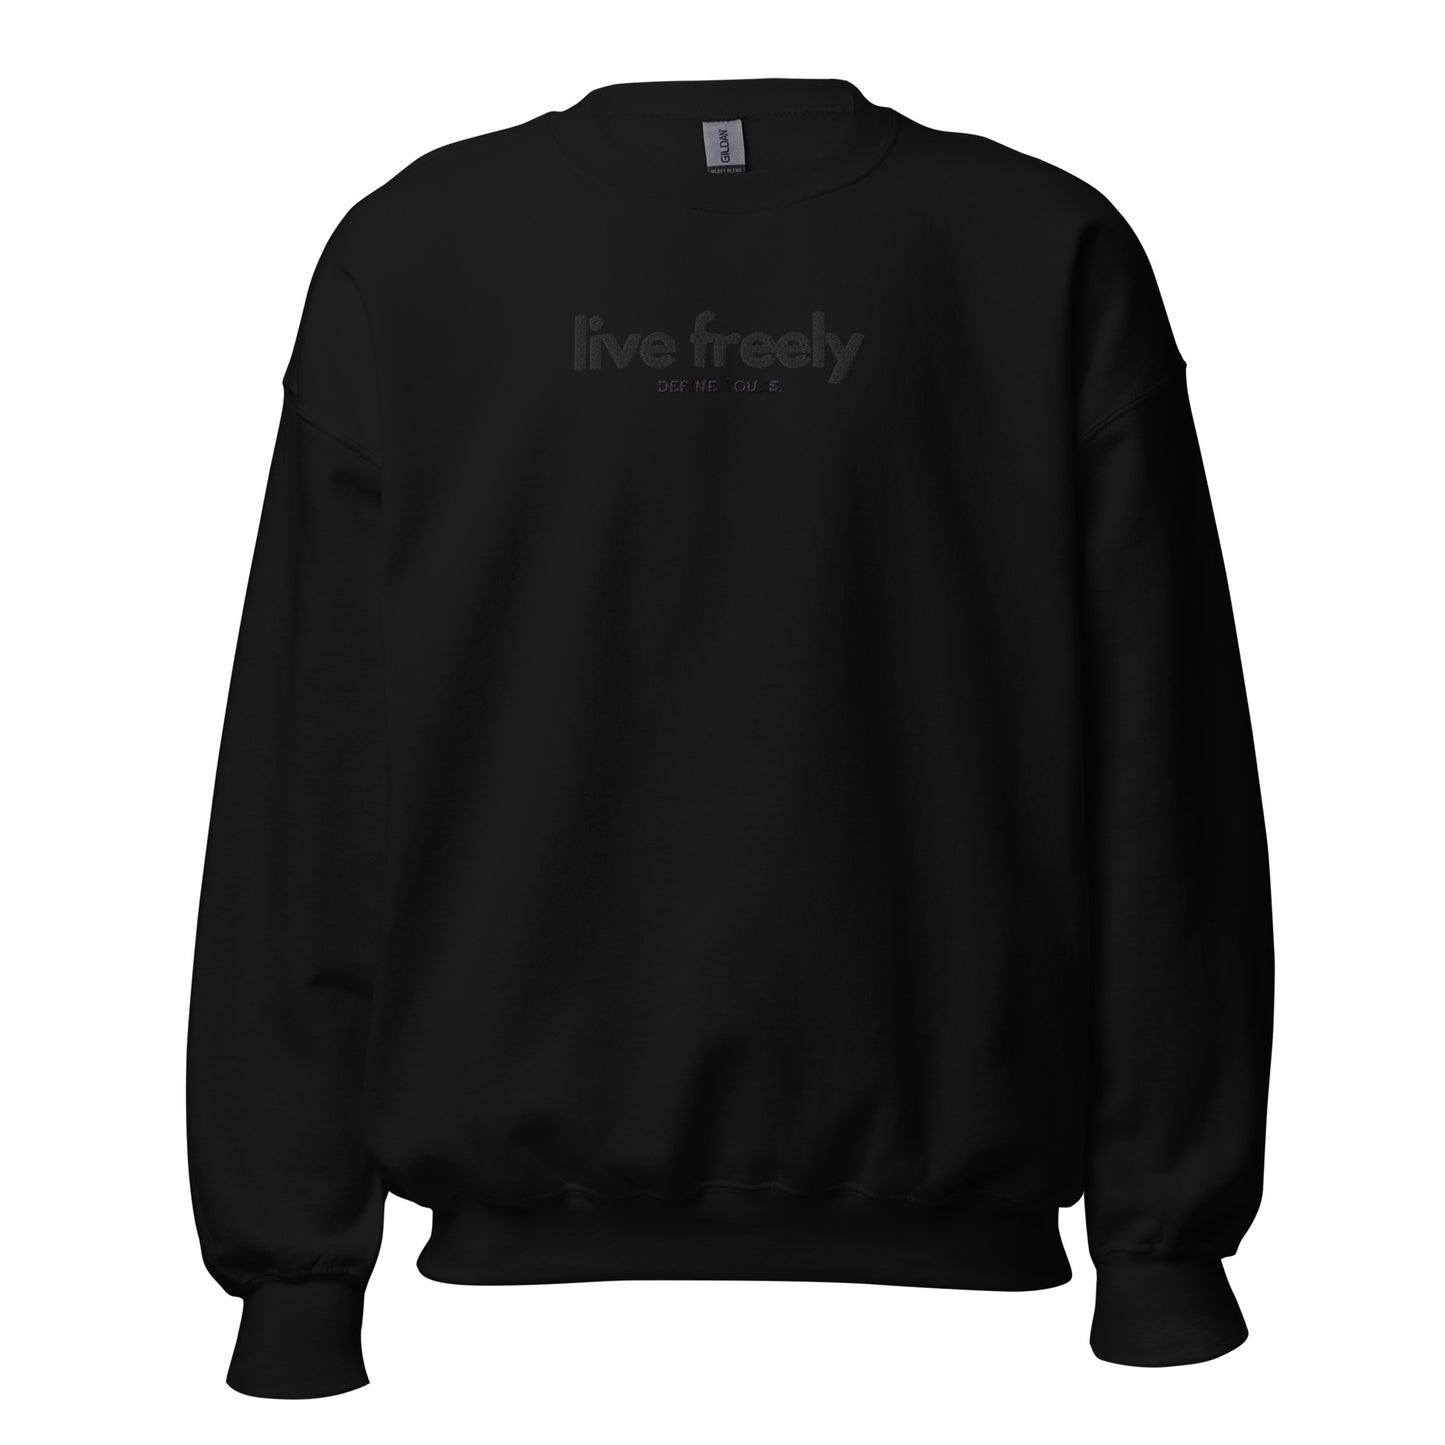 Live Freely Embroidered Unisex Sweatshirt